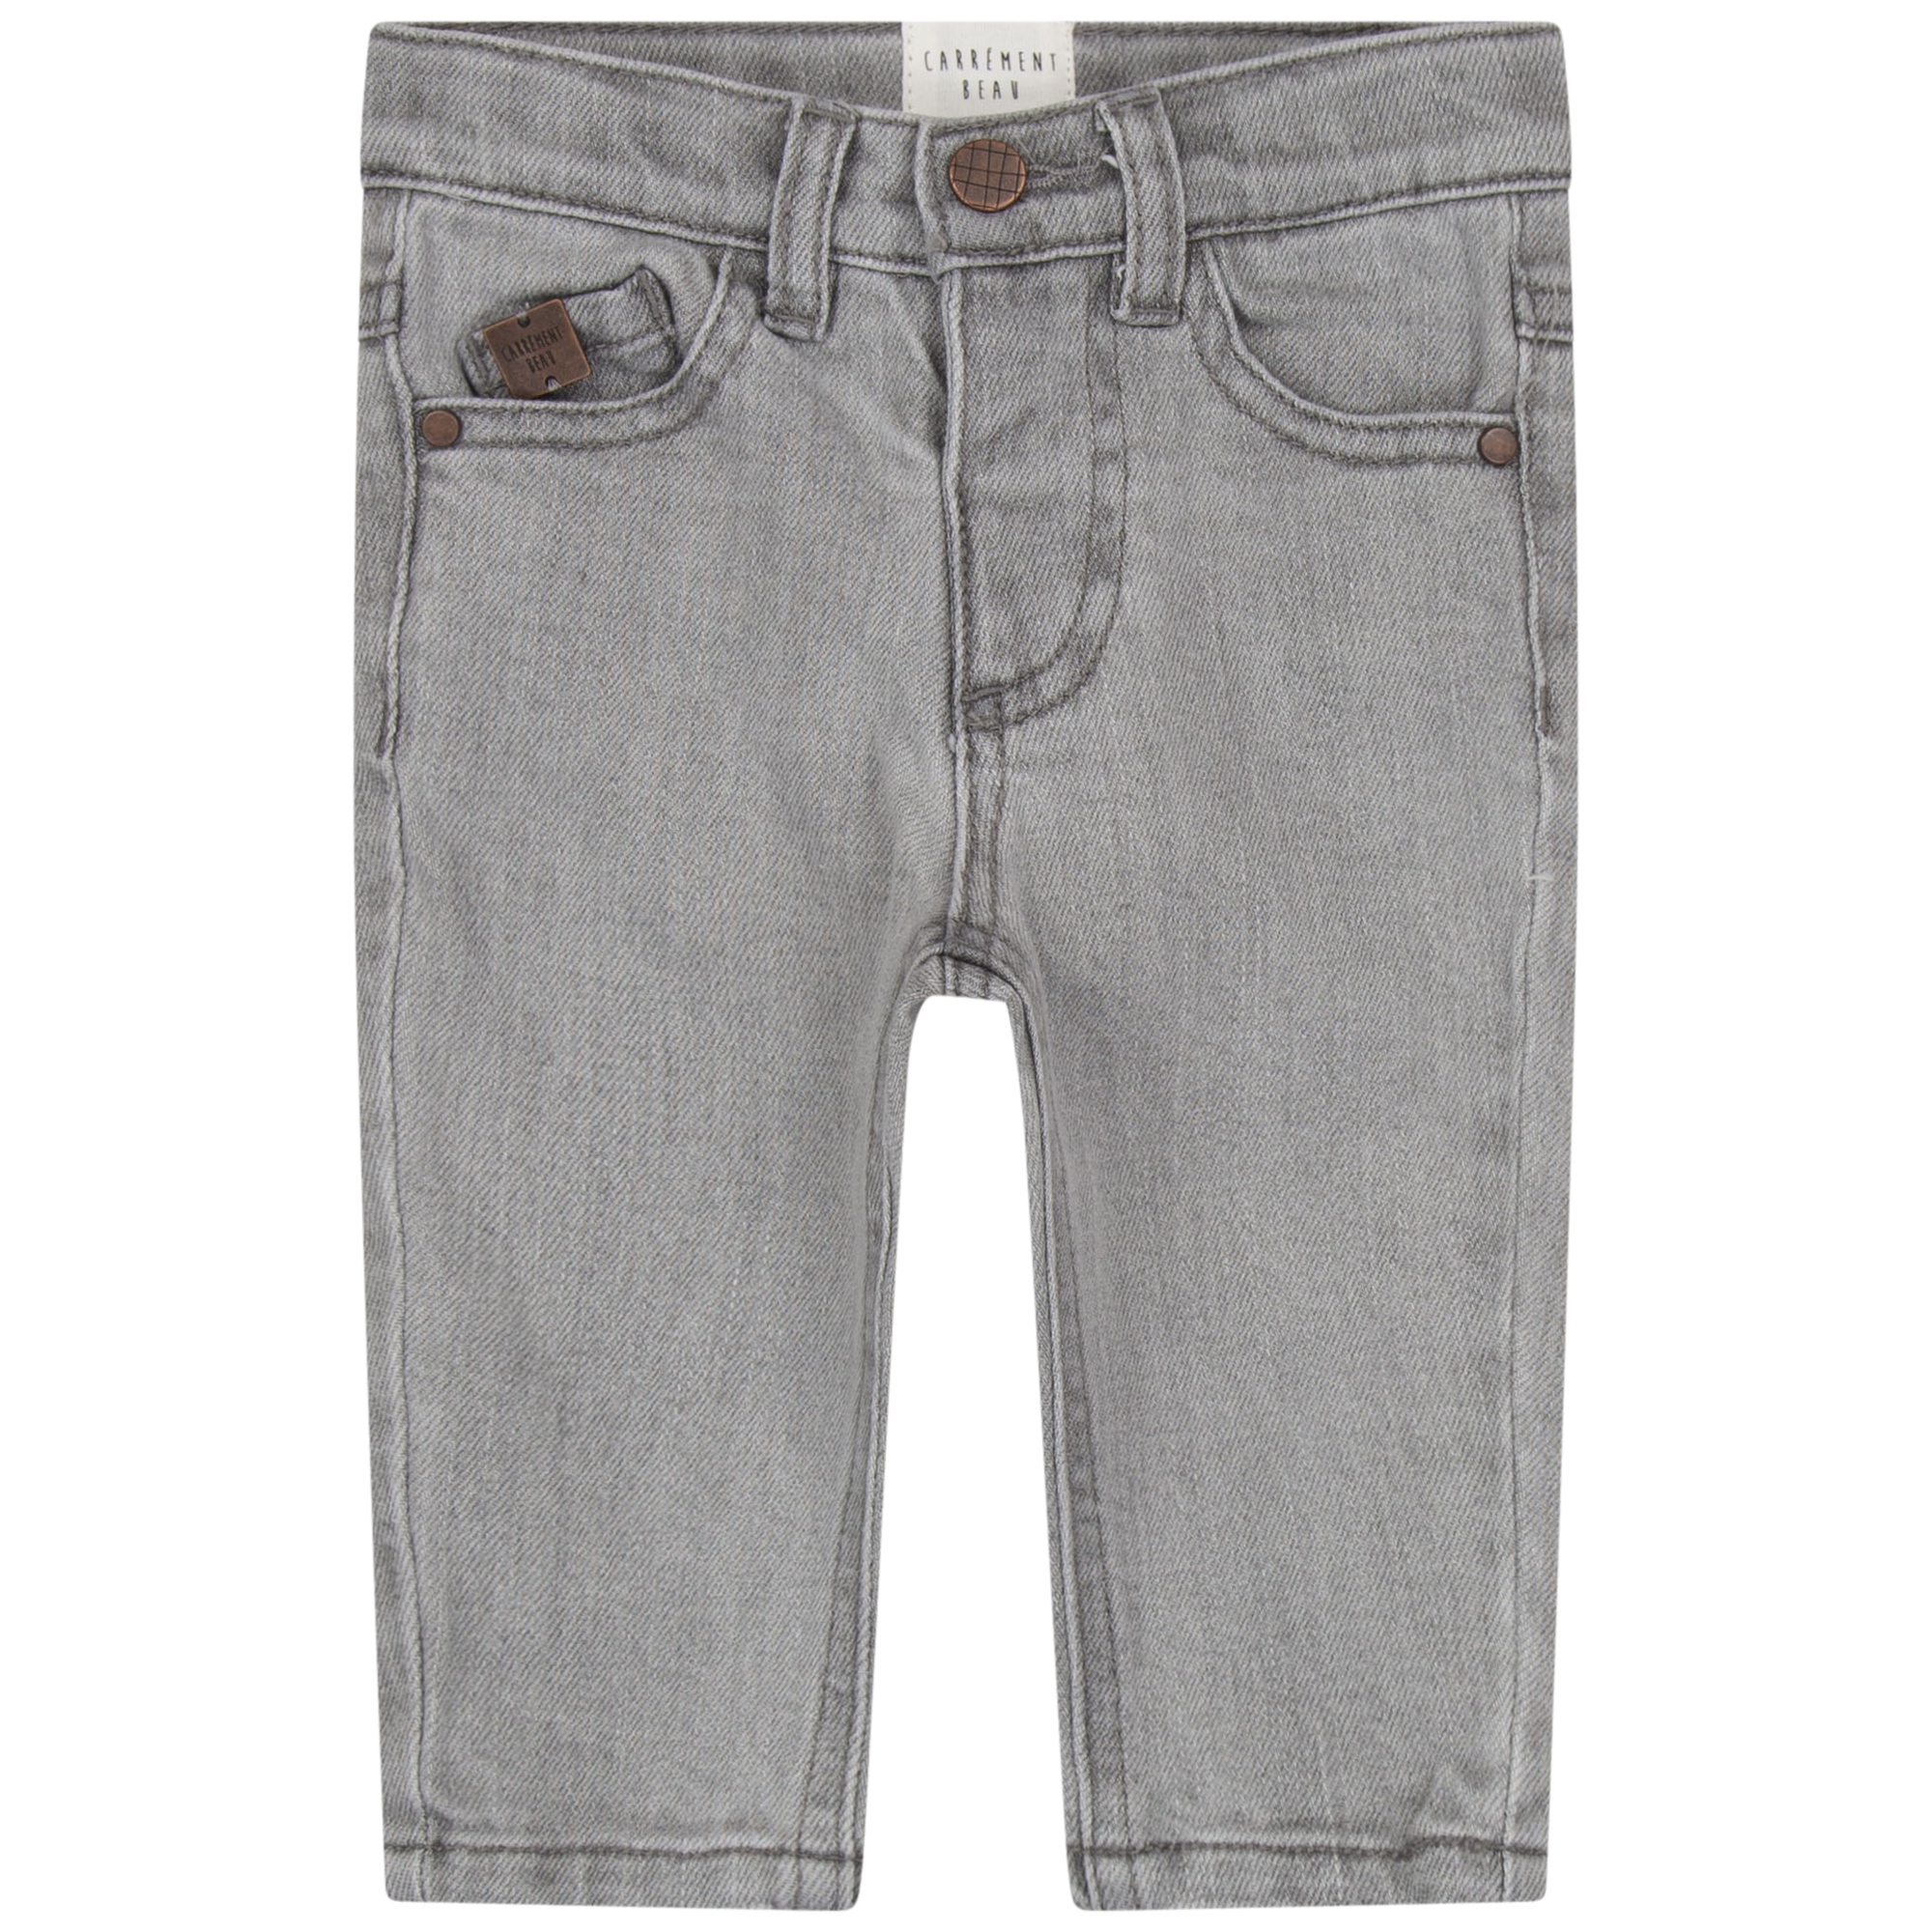 Riveted cotton 5-pocket jeans CARREMENT BEAU for BOY